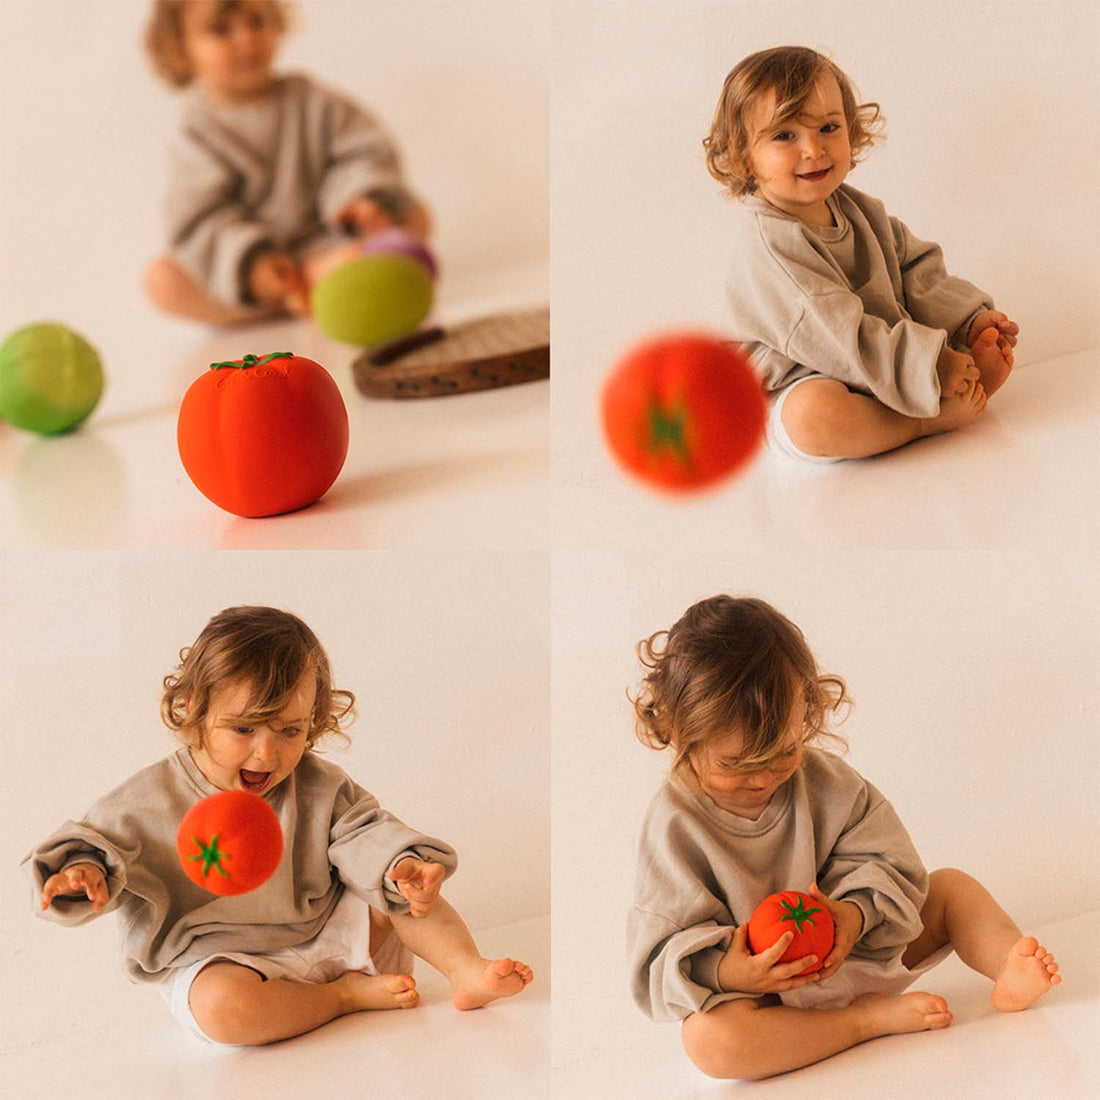 oli-carol-tomato-ball-baby-nursery-olic-l-ball-tomato